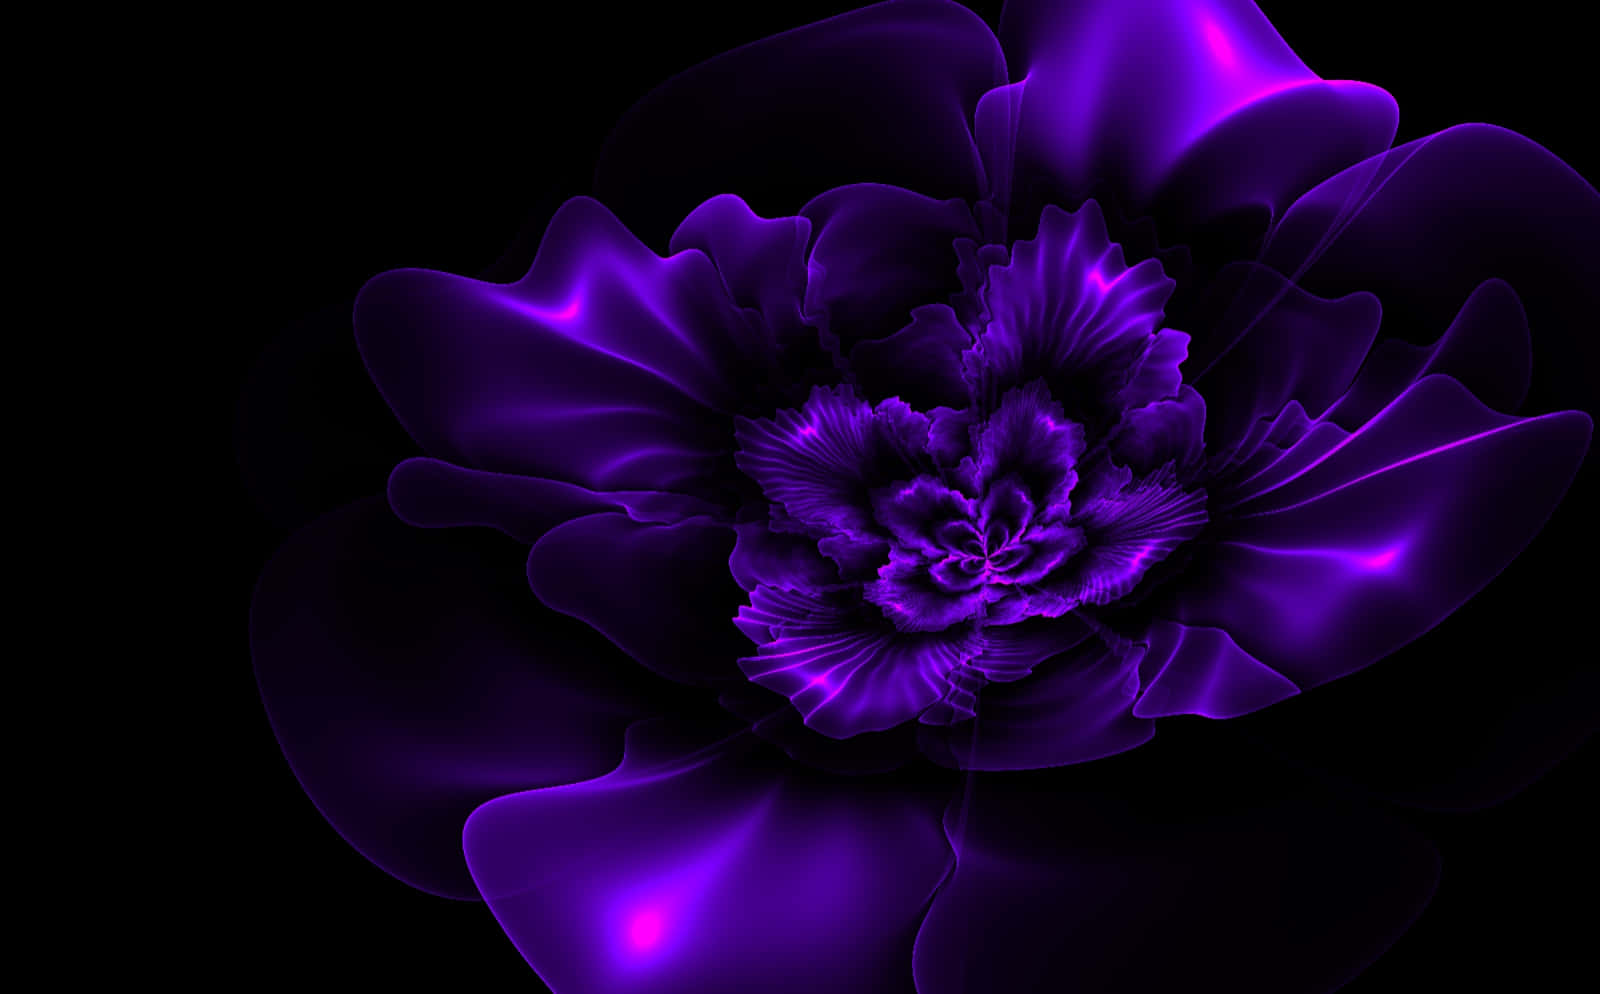 The Splendor of Purple and Black